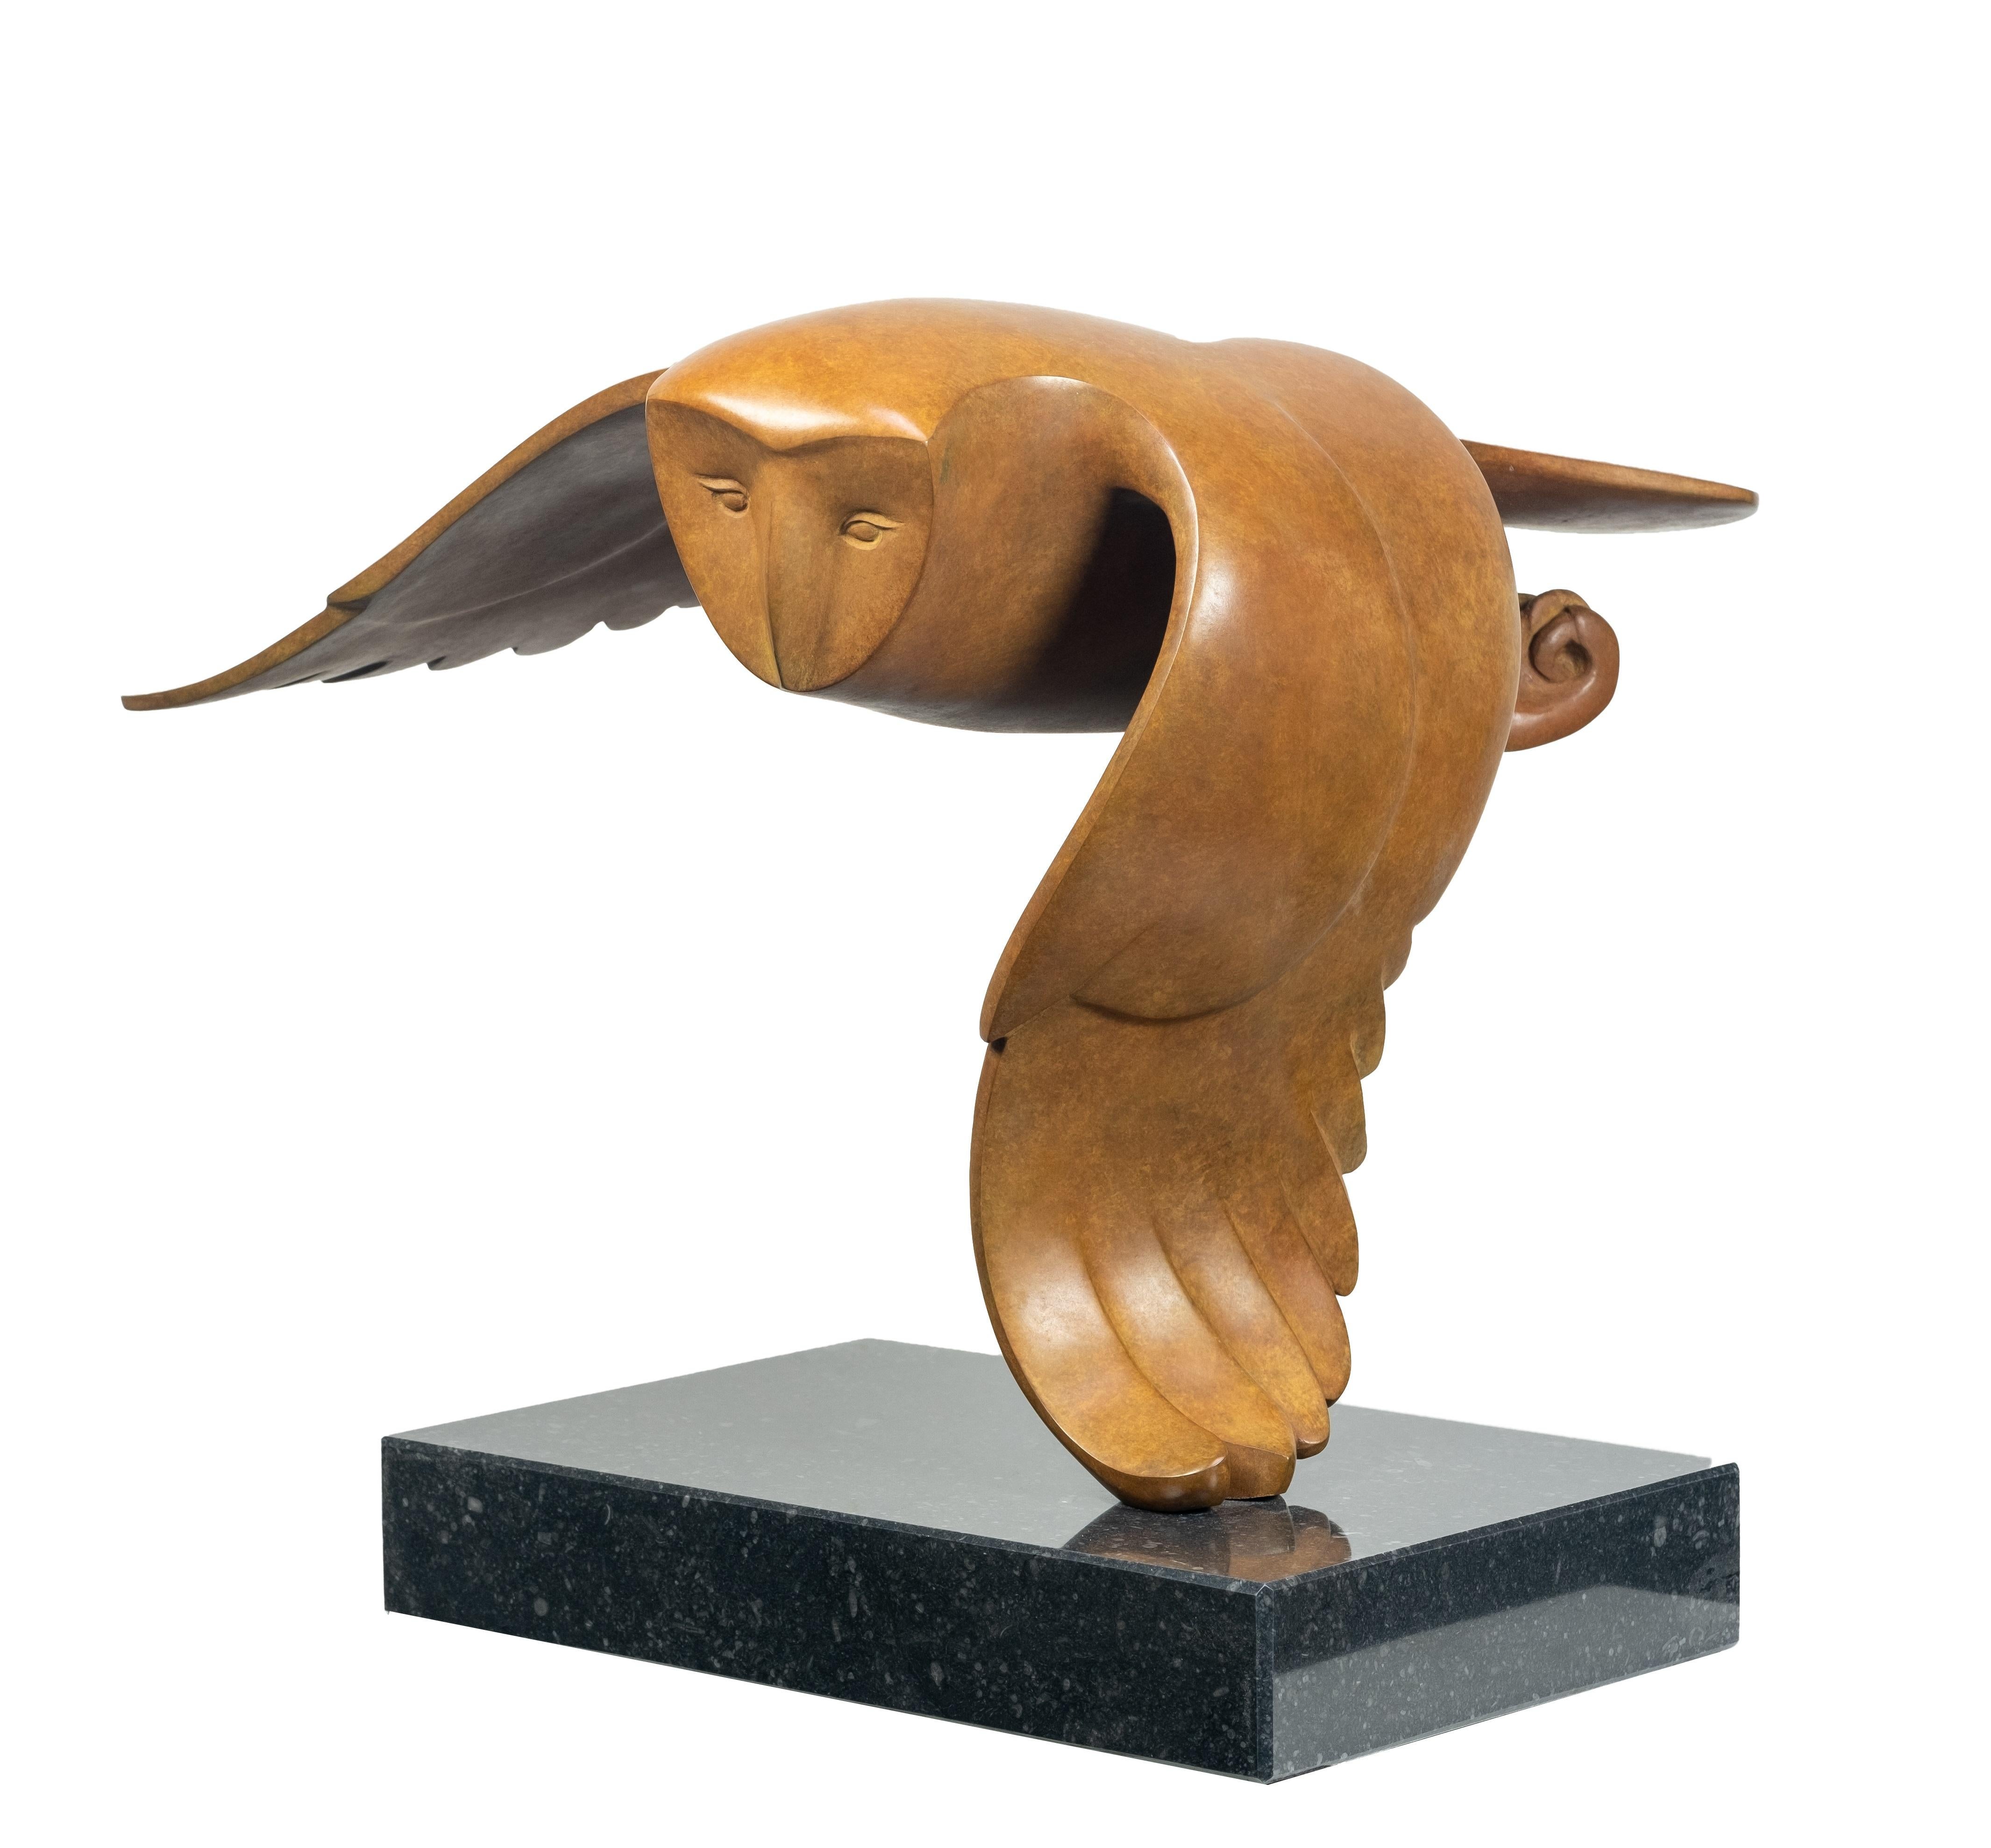 Evert den Hartog Figurative Sculpture - Vliegende Uil no. 5 (Flying Owl) Bird Bronze Sculpture Animal  